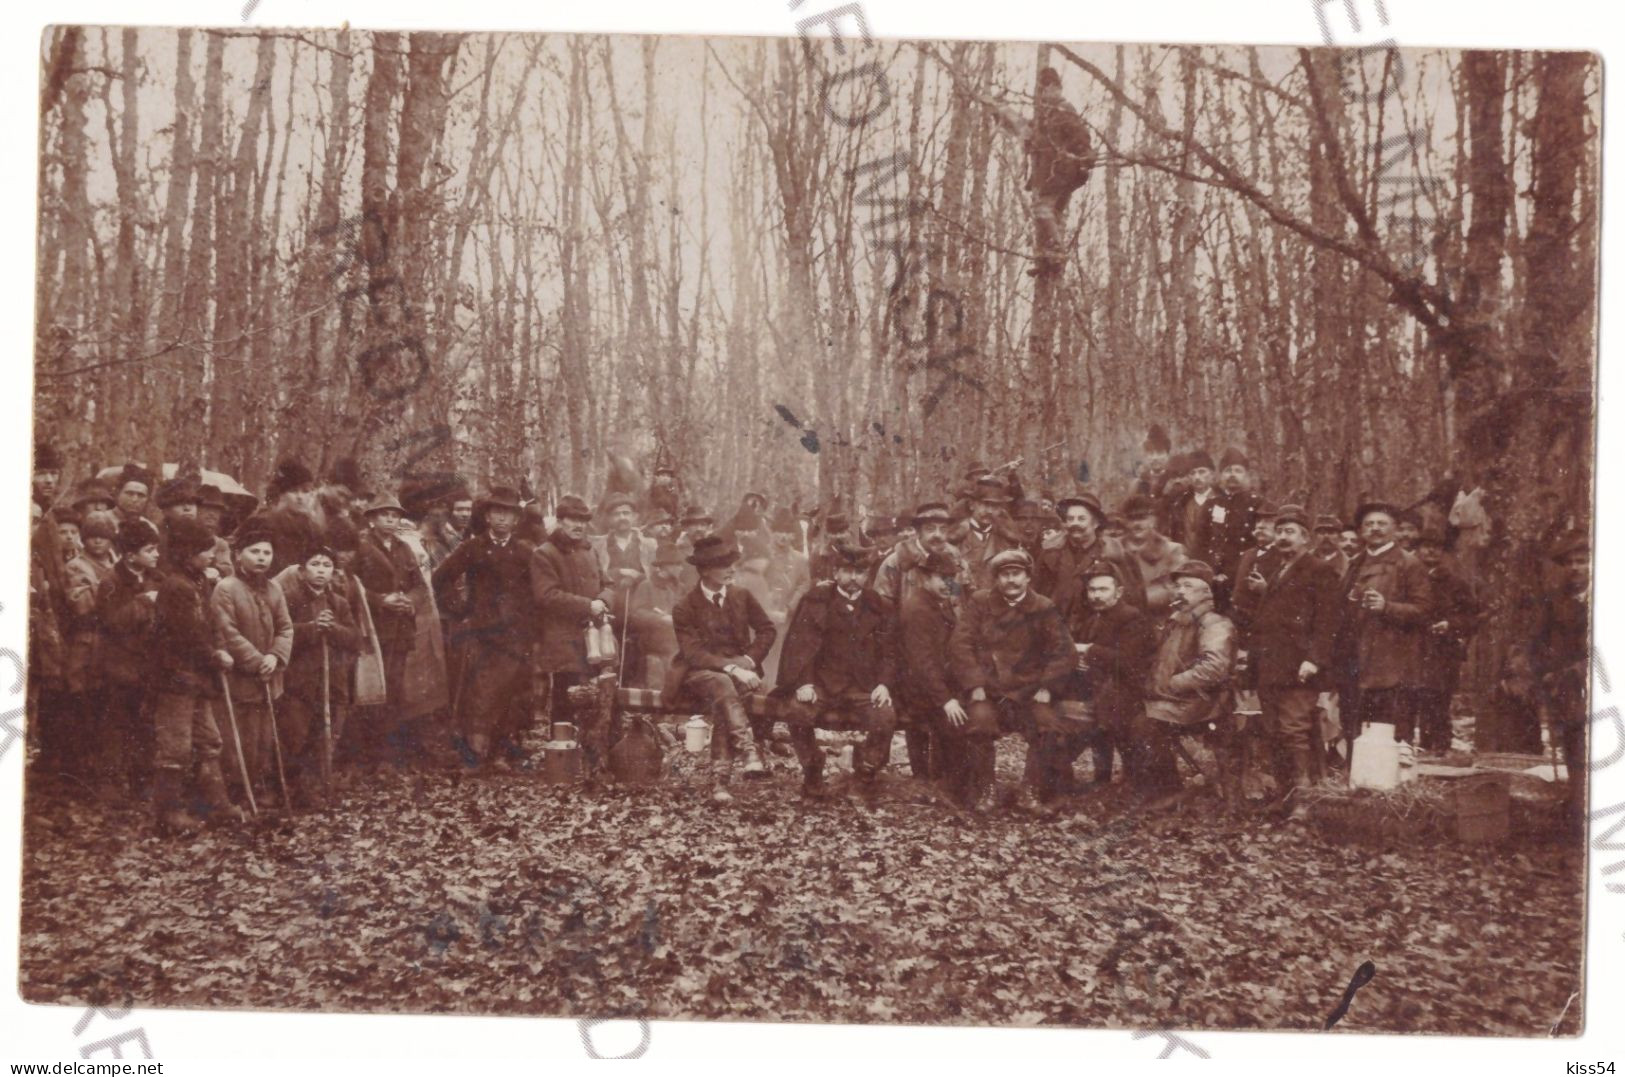 RO 86 - 16746 ORADEA, Hunting, Vanatoare, Romania - Old Postcard, Real PHOTO - Used - 1913 - Roumanie